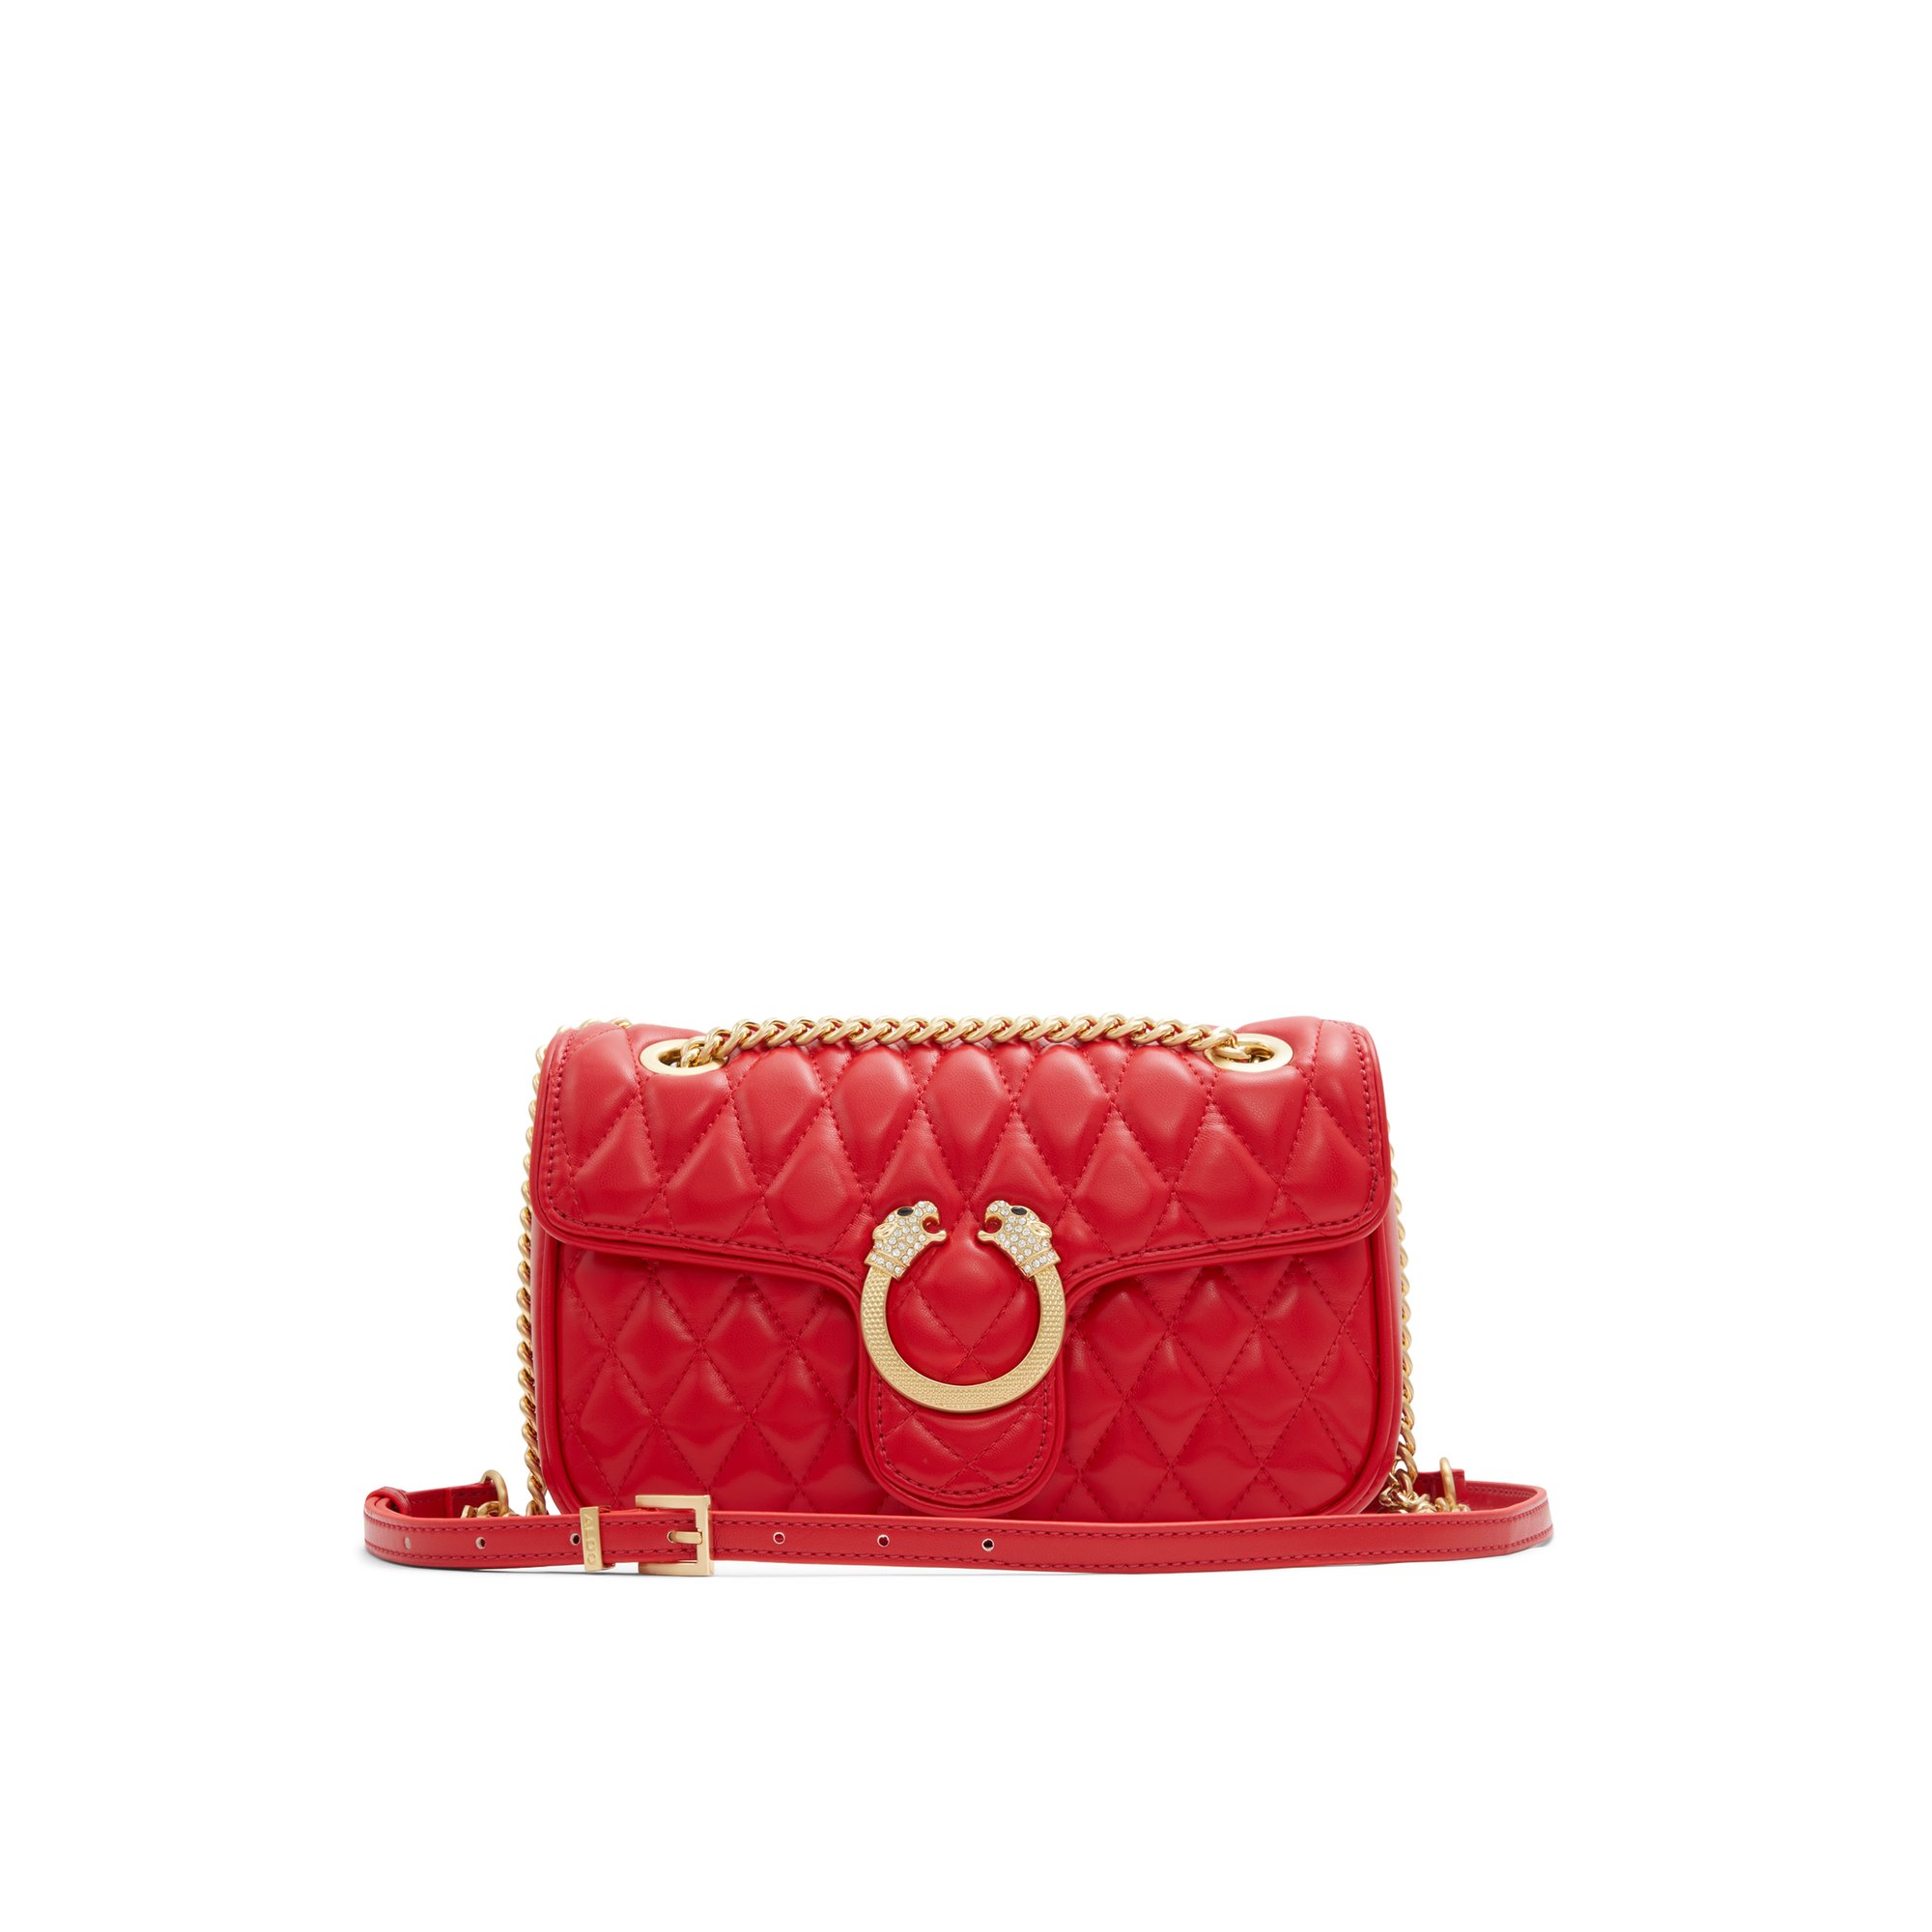 ALDO Marleighhx - Women's Handbags Crossbody - Red